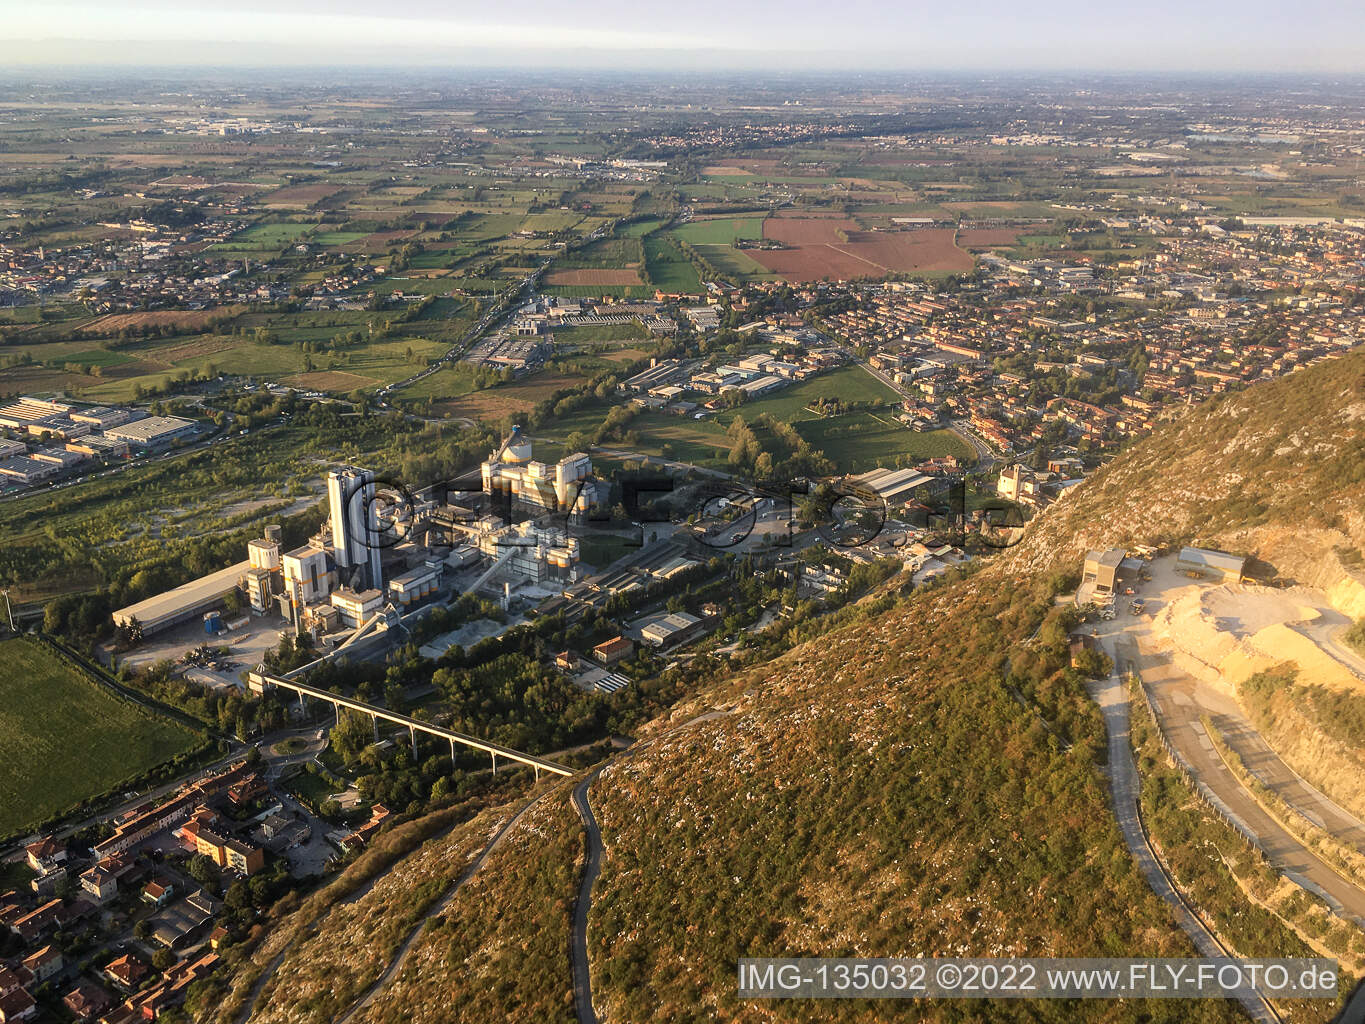 Luftbild von Zementfabrik Italcementi Spa Rezzato im Bundesland Brescia, Italien